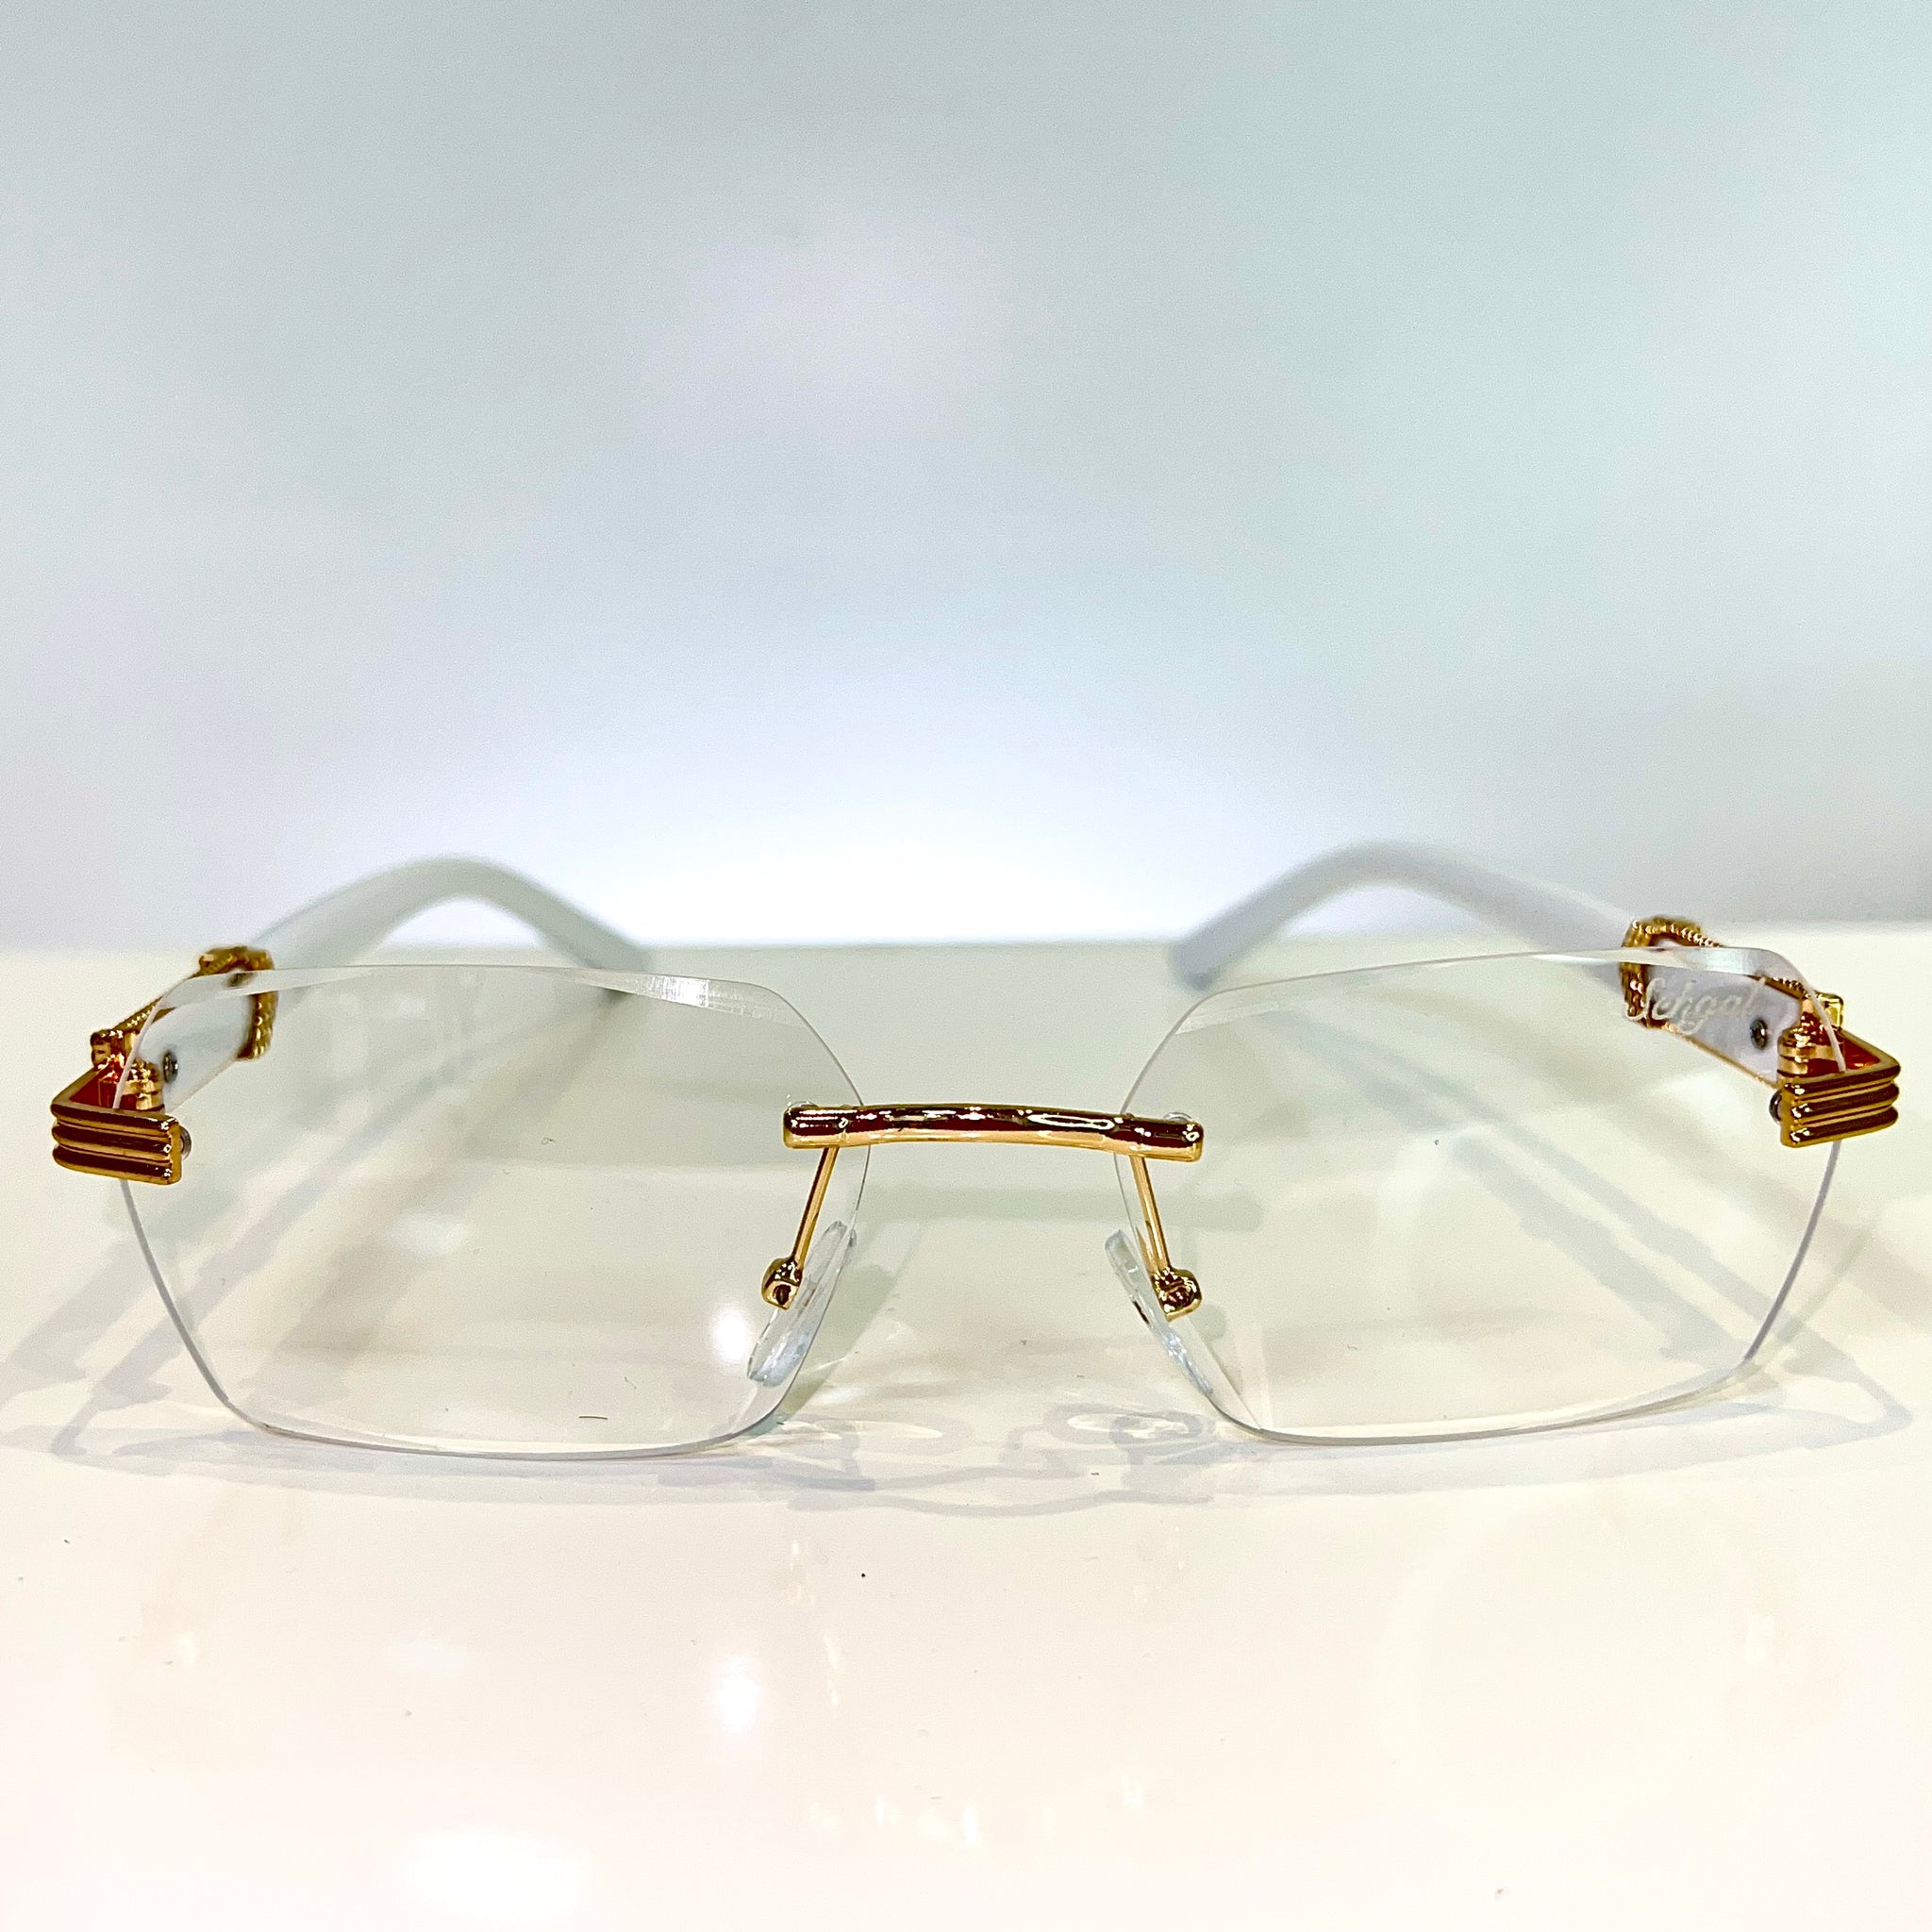 Marblecut Glasses - 14 carat gold plated -  Transparant Shade